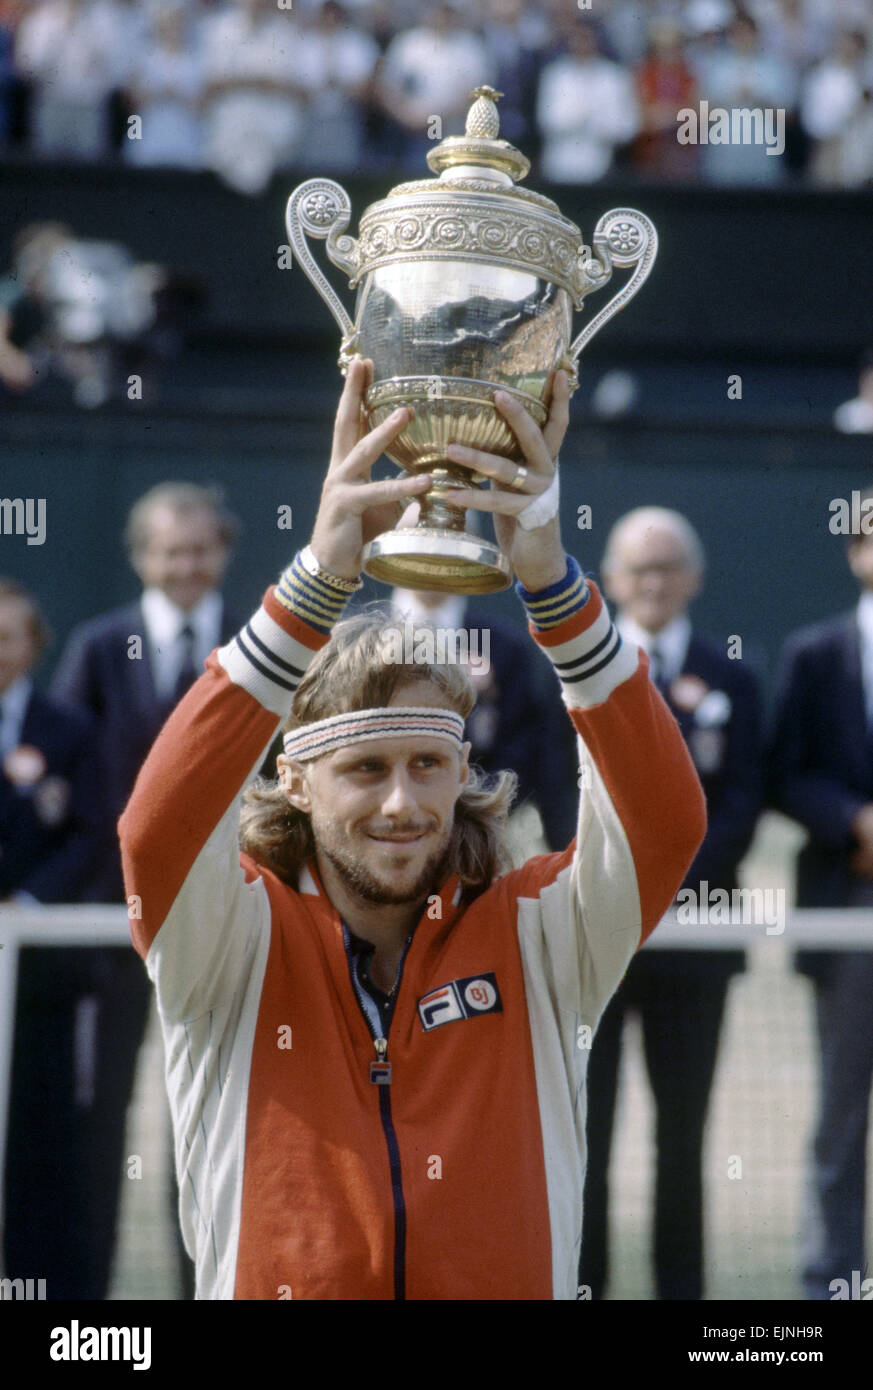 Wimbledon Final 1980. John McEnroe v Bjorn Borg. Borg holds up the trophy  after winning. 5th July 1980. *** Local Caption *** watscan - - 19/04/2010  Stock Photo - Alamy